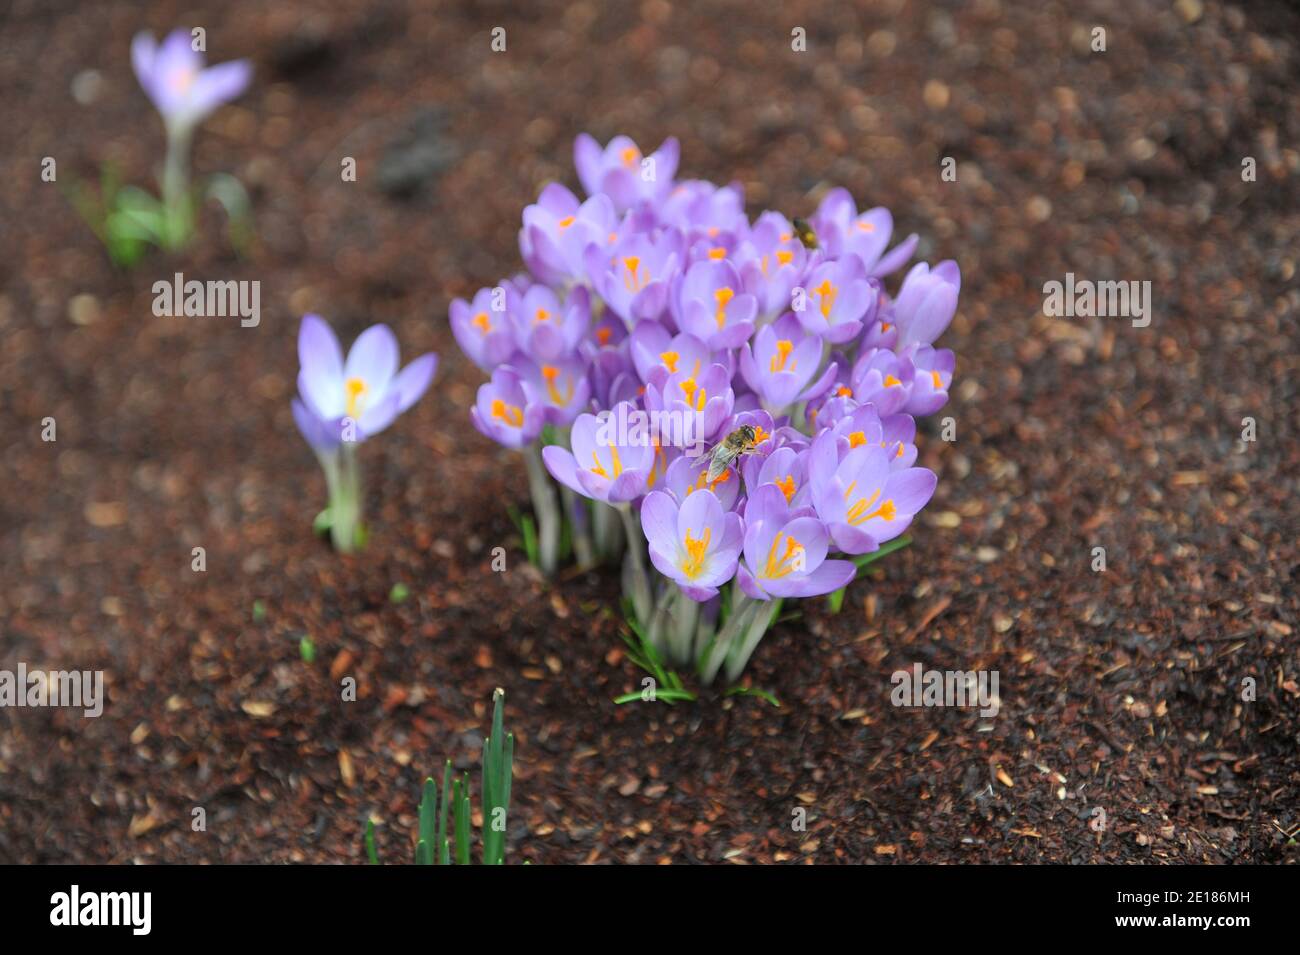 Violett-violetter Frühkrokus (Crocus tommasinianus) Whitewell Purple blüht im Februar in einem Garten Stockfoto